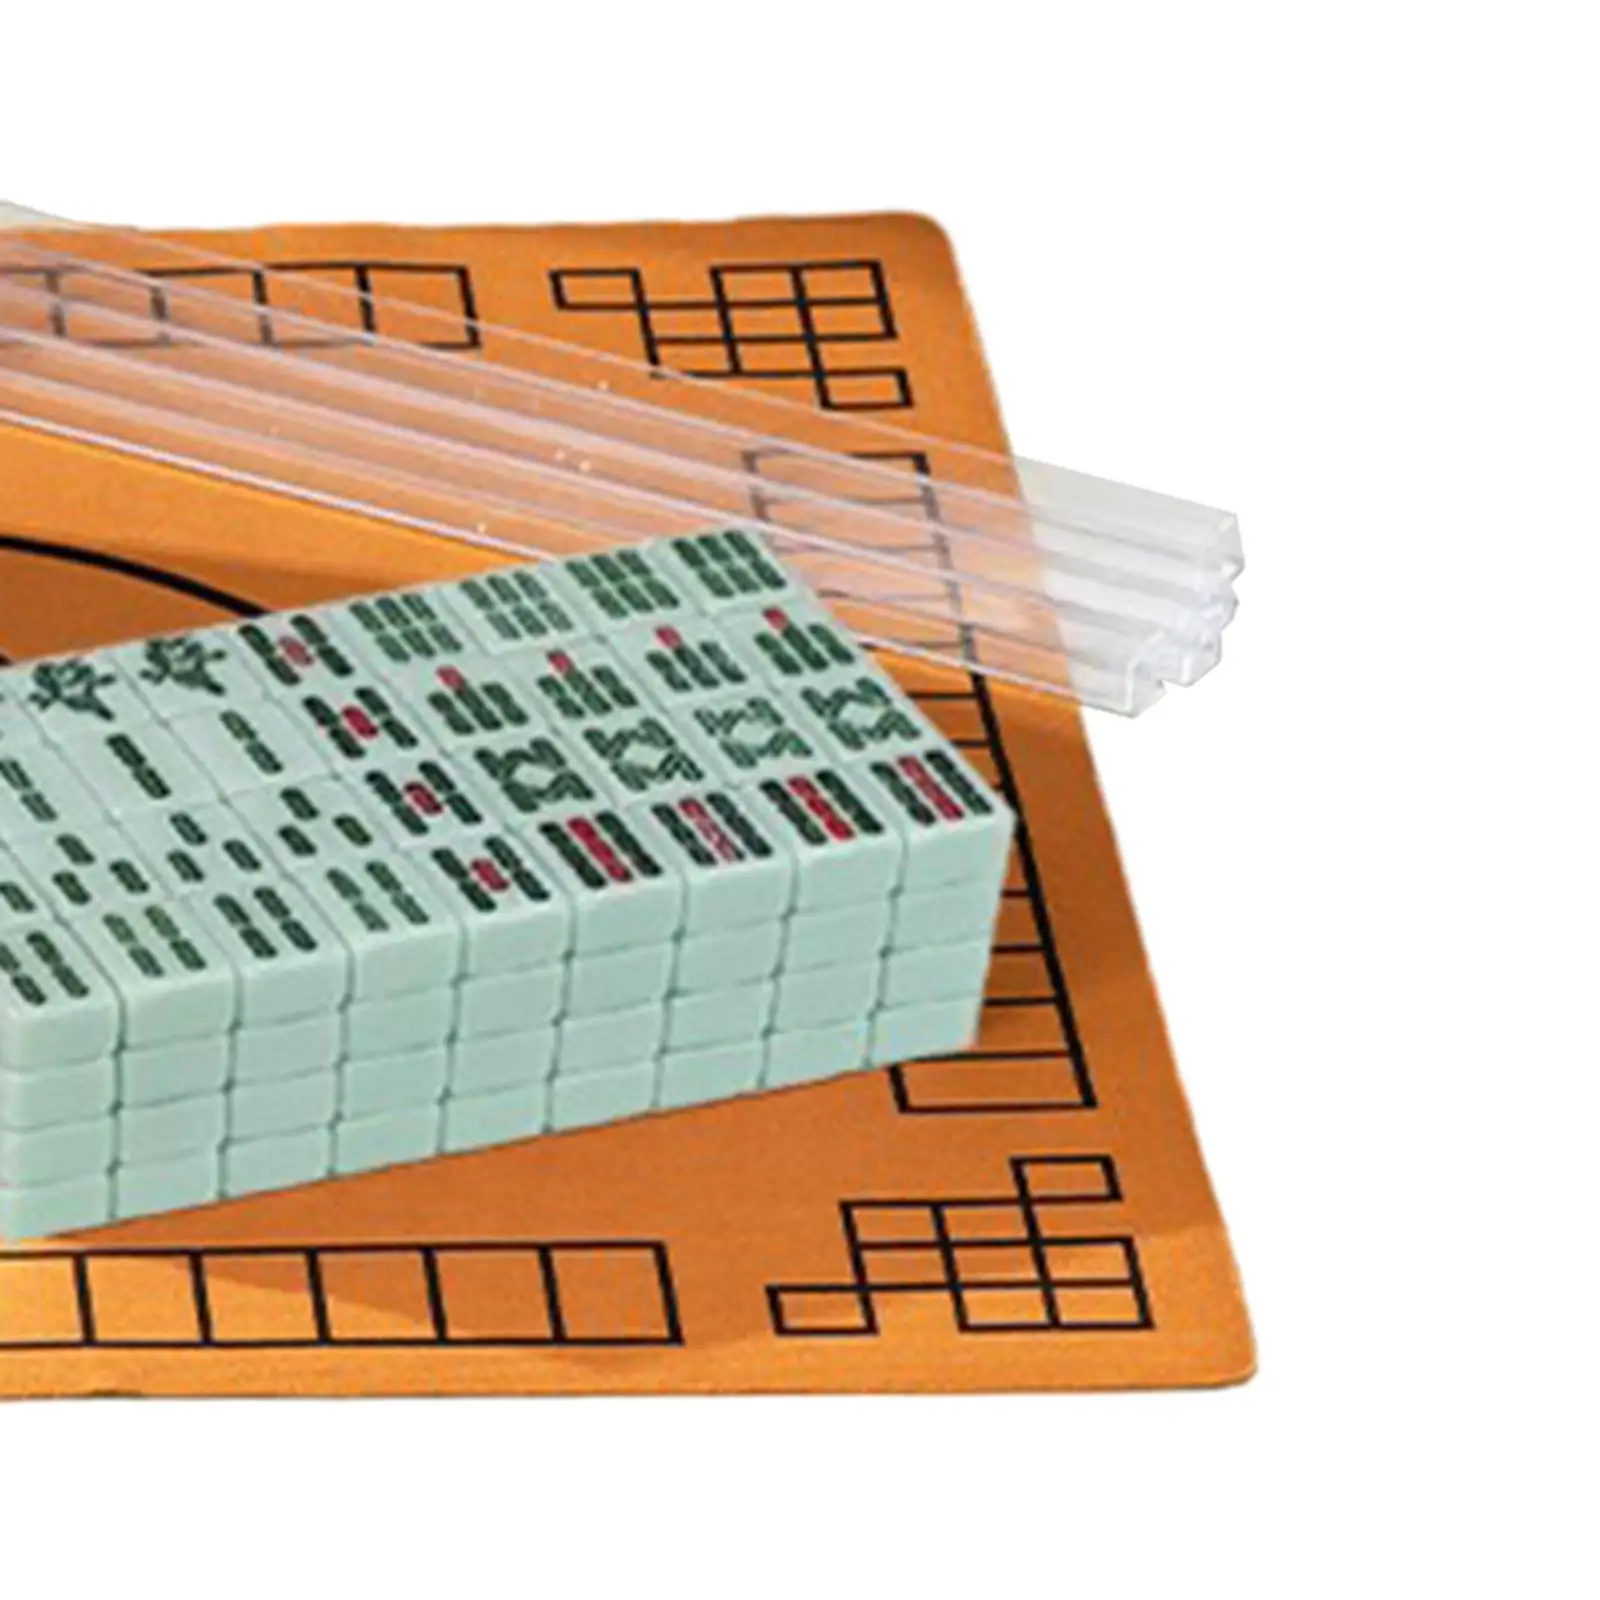 Mini mAh Jong Game Set, Chinese Mahjong Tiles Set, 144 Tiles, Chinese Traditional Games for Holiday